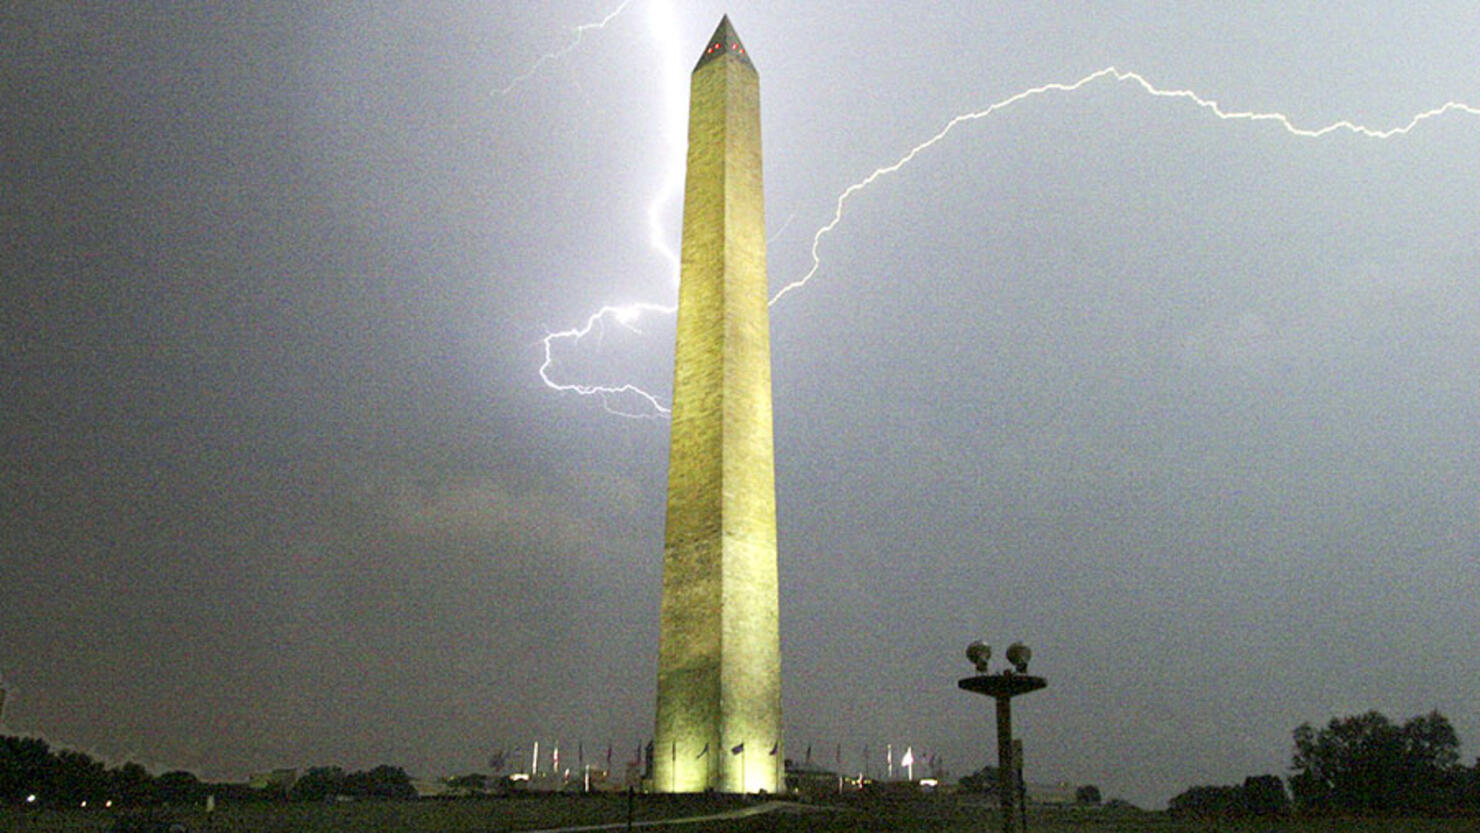 Lightning strikes behind the Washington Monument during a su